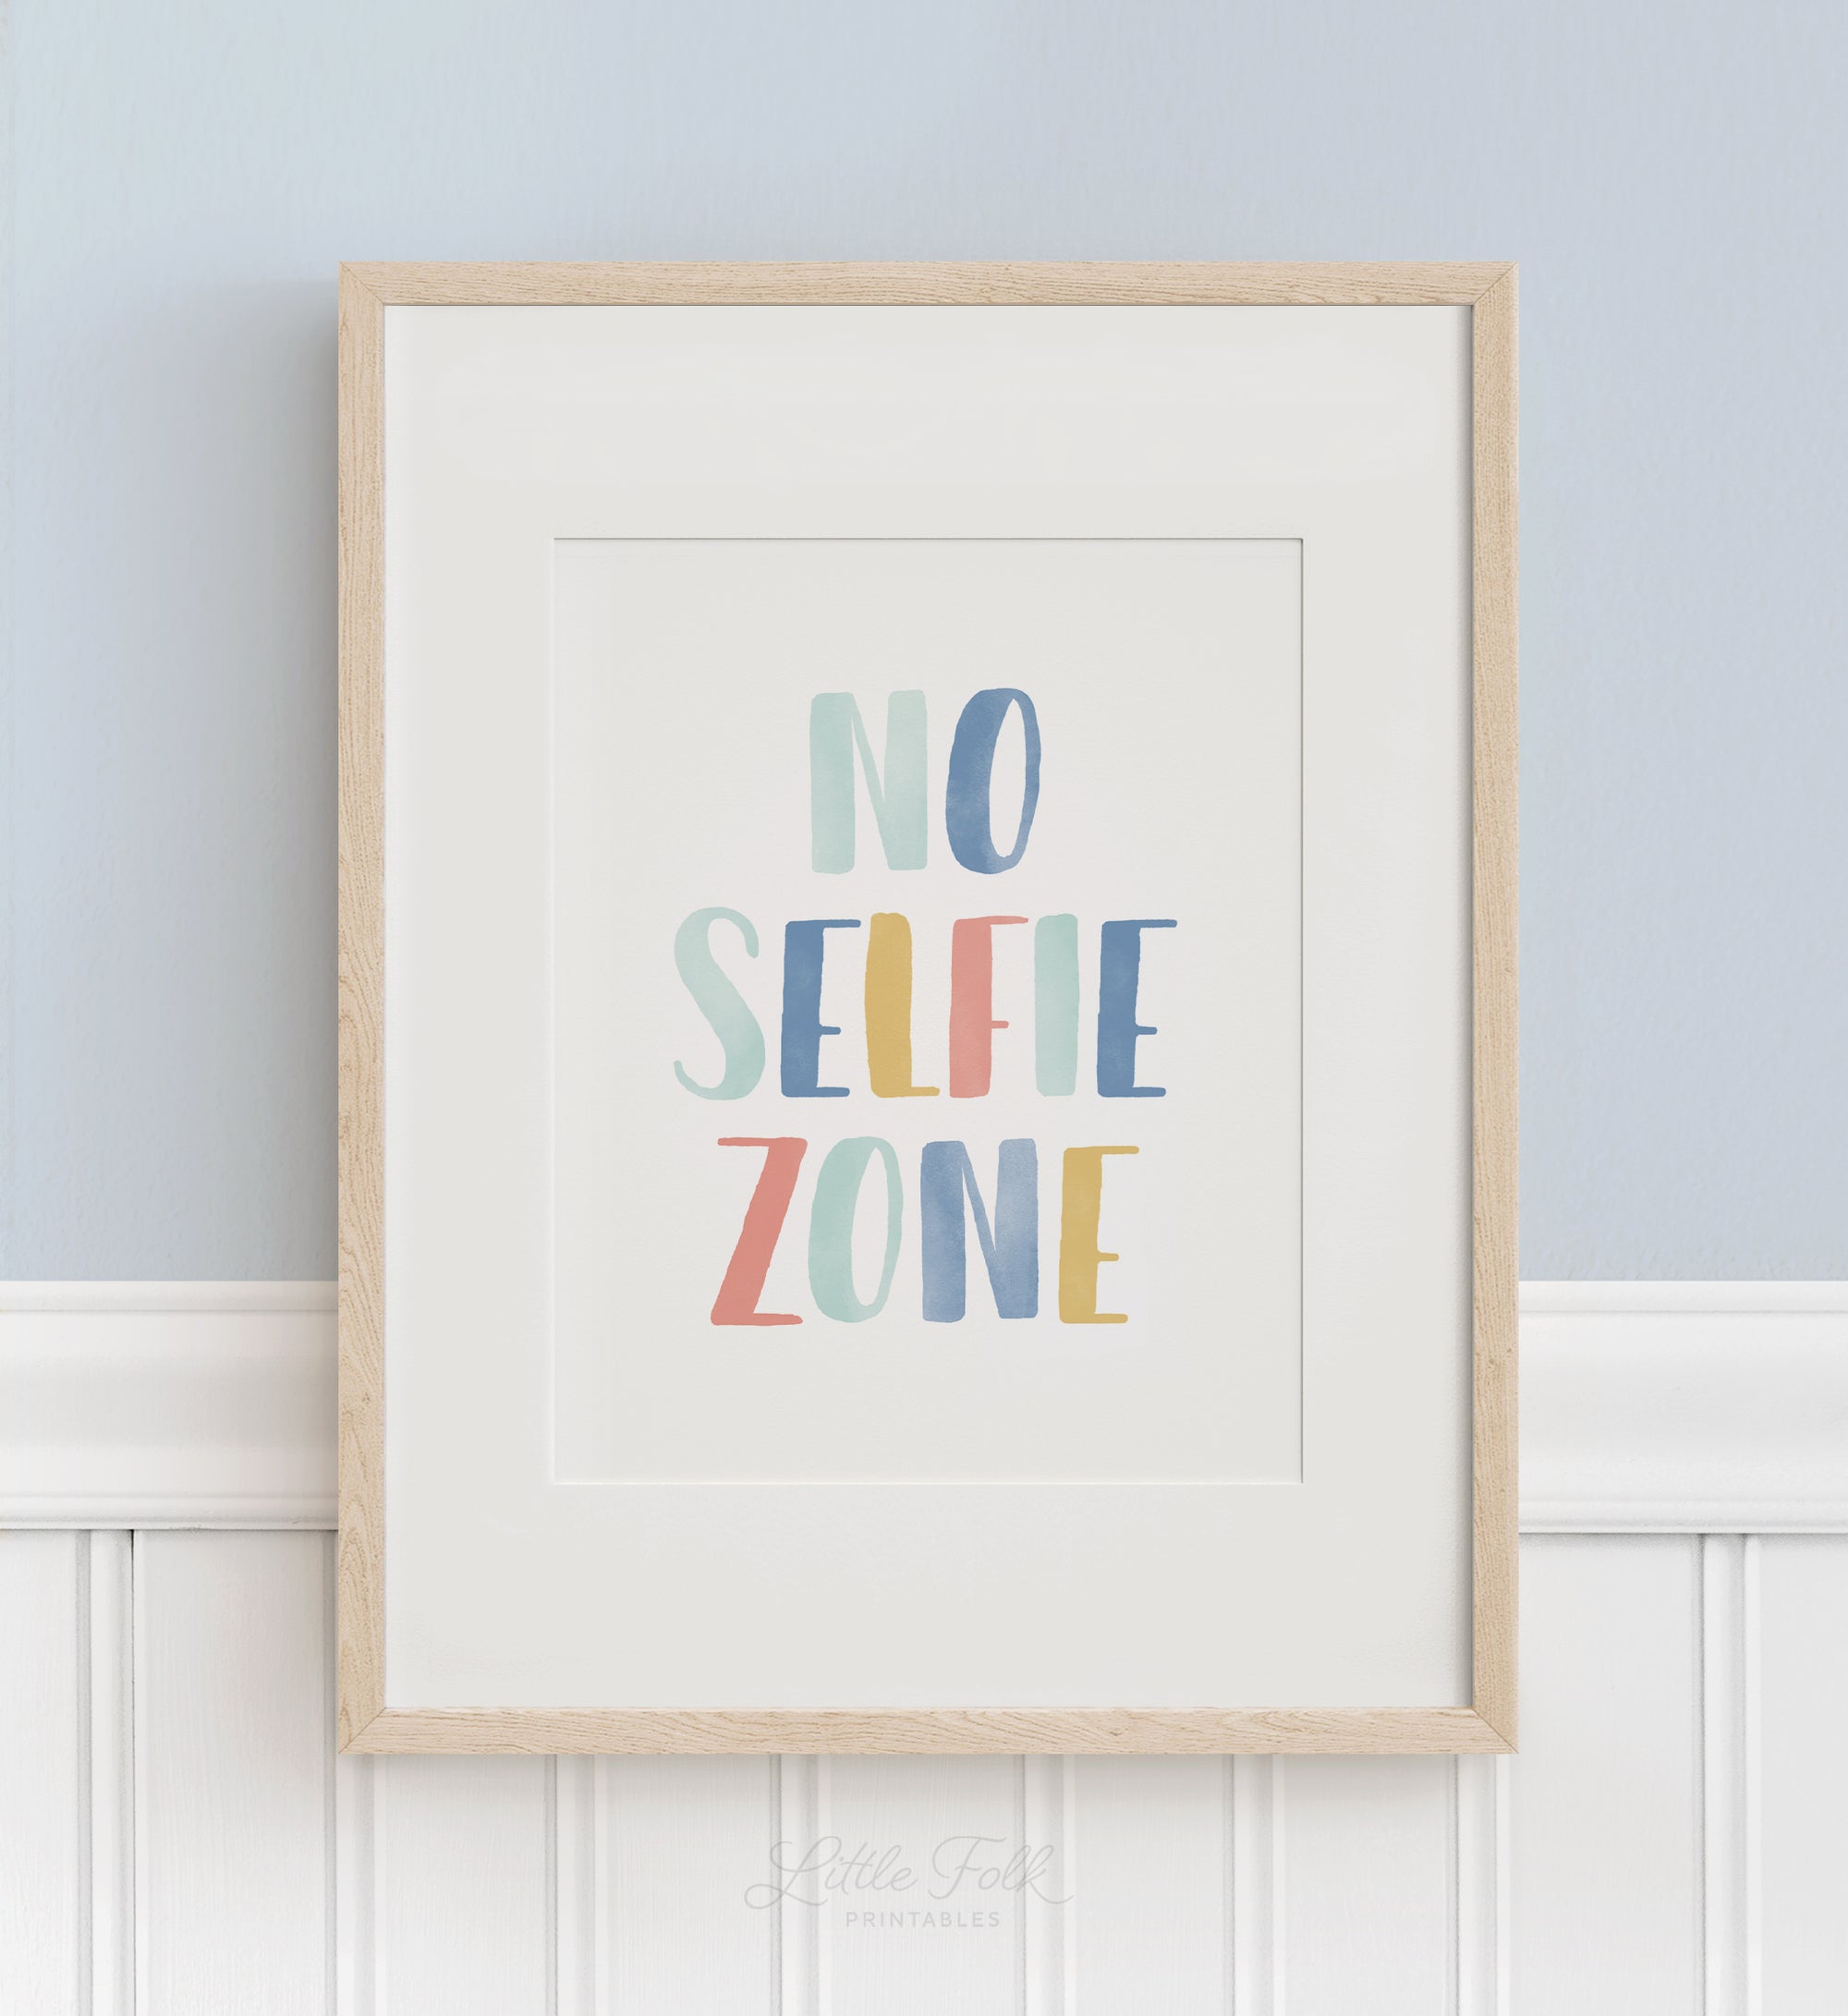 No Selfie Zone Print